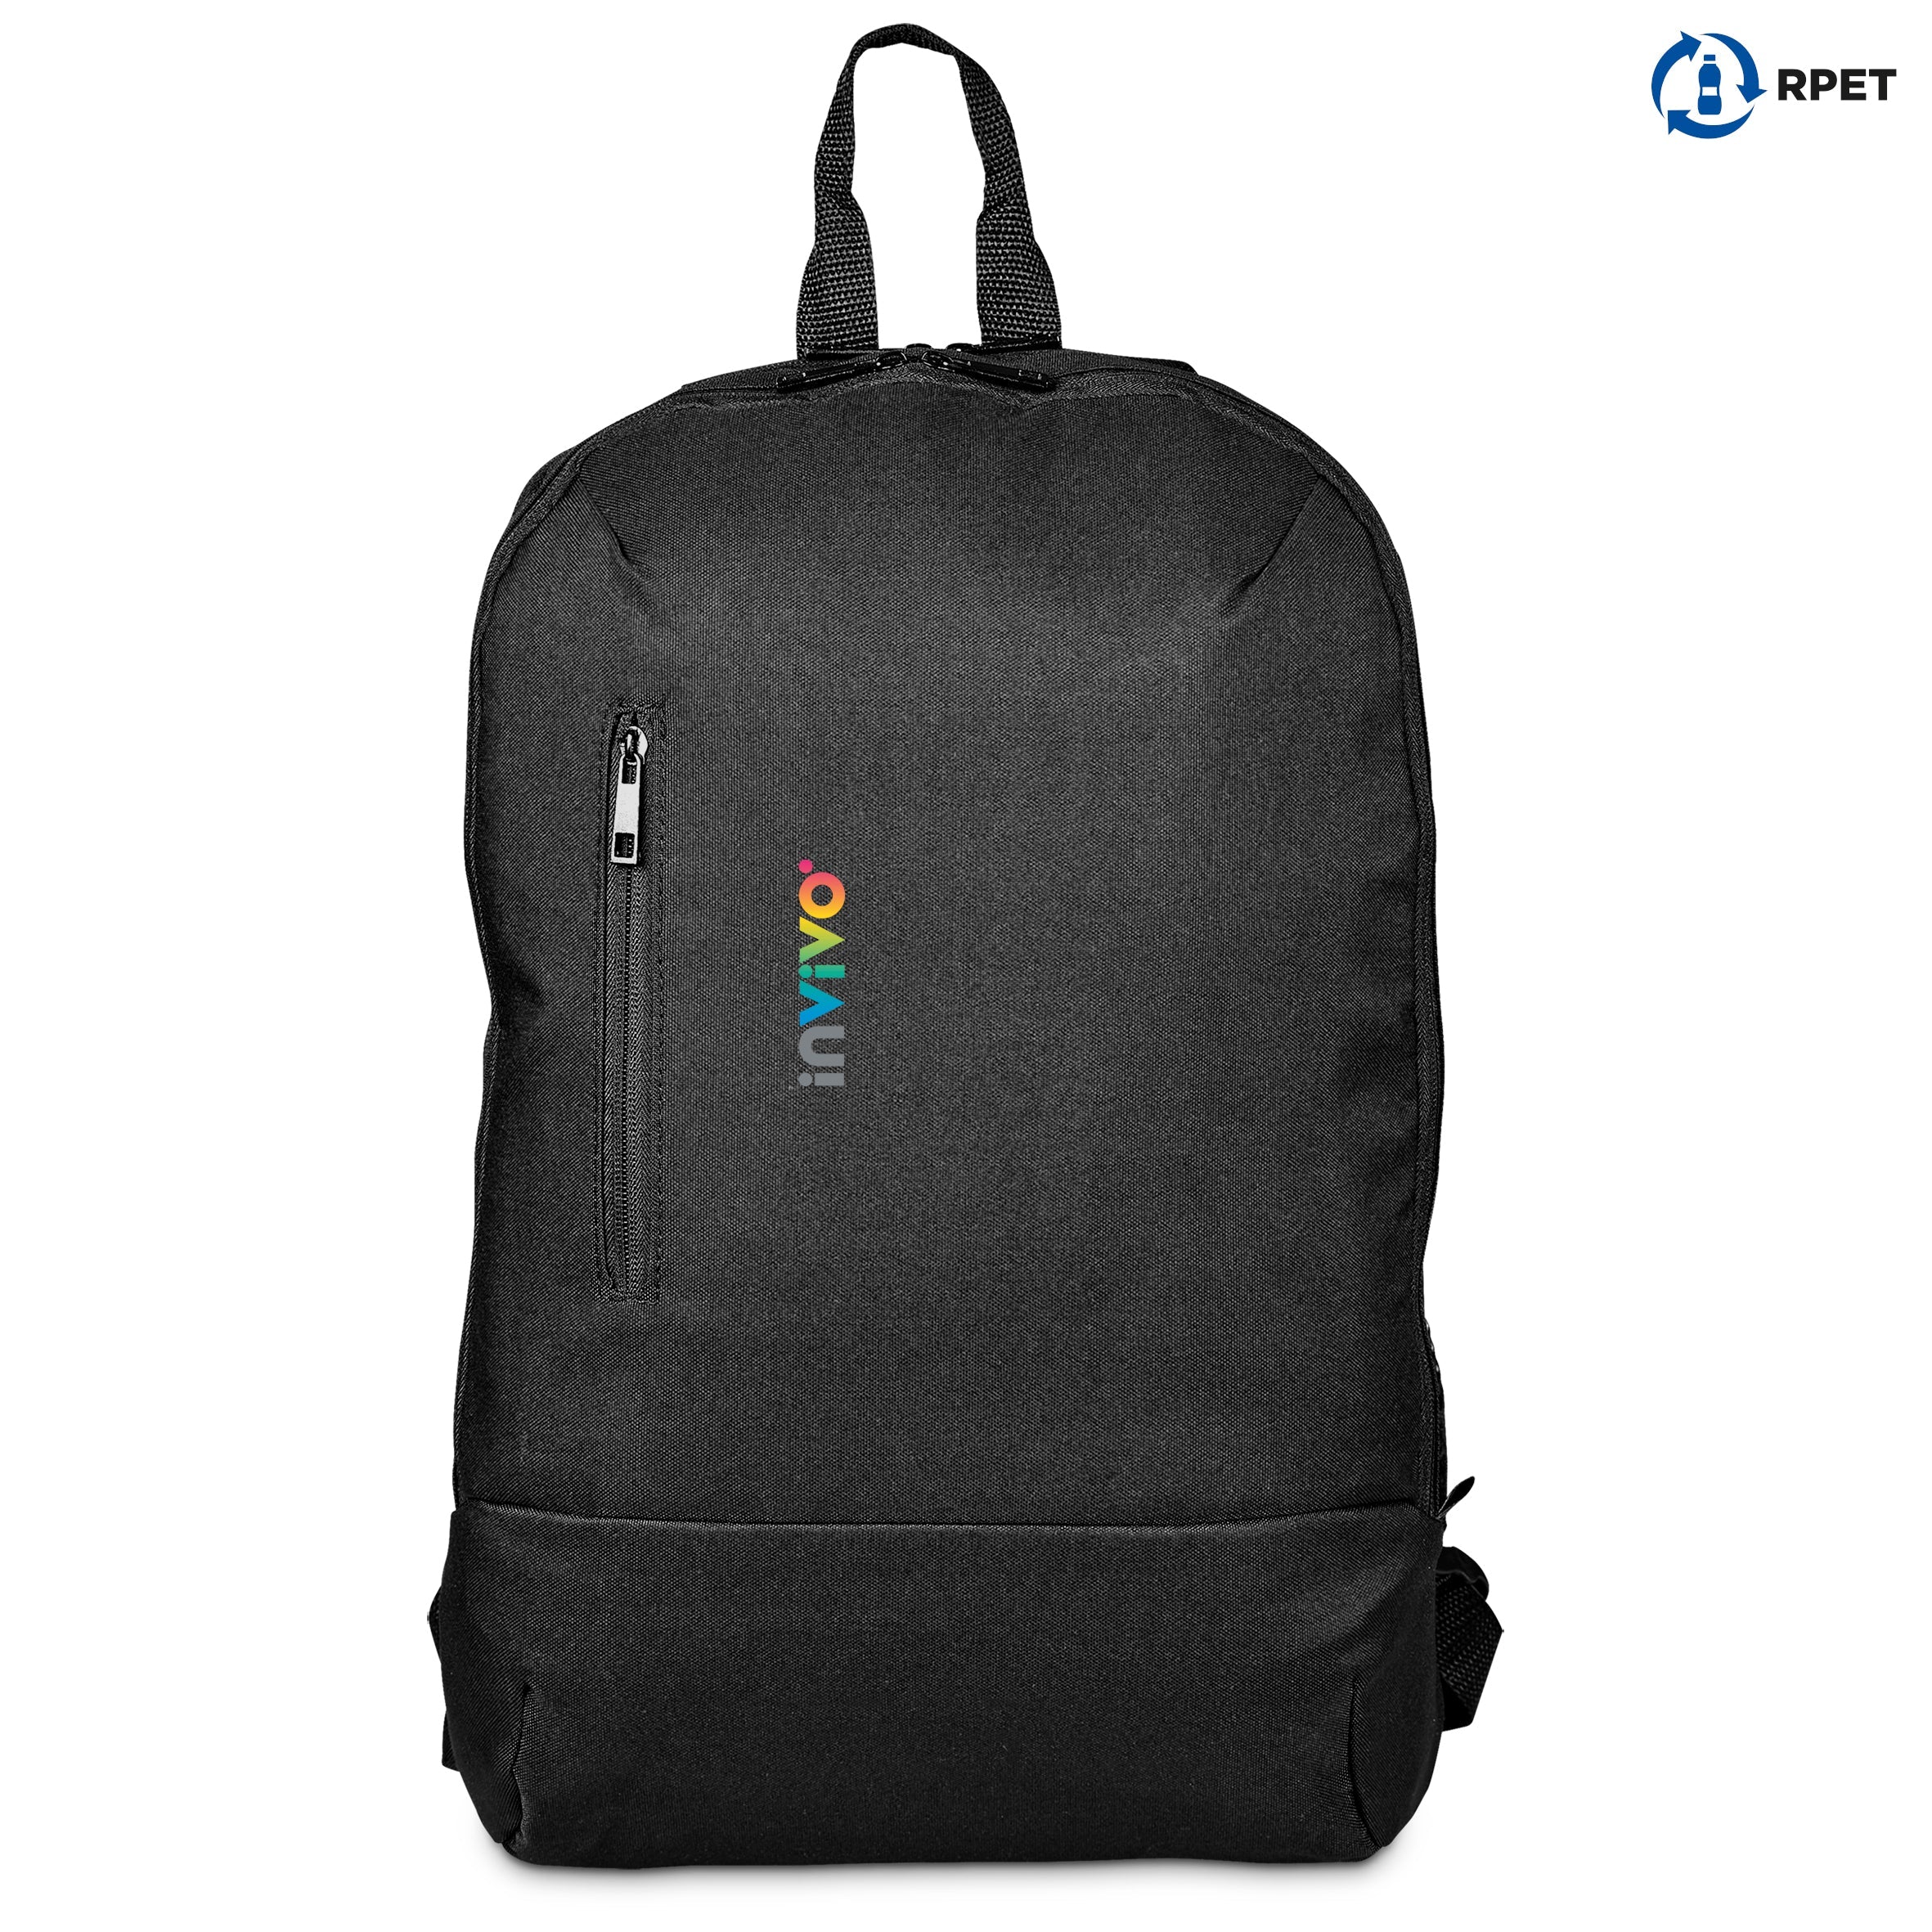 Oscar Recycled PET Laptop Backpack Black / BL